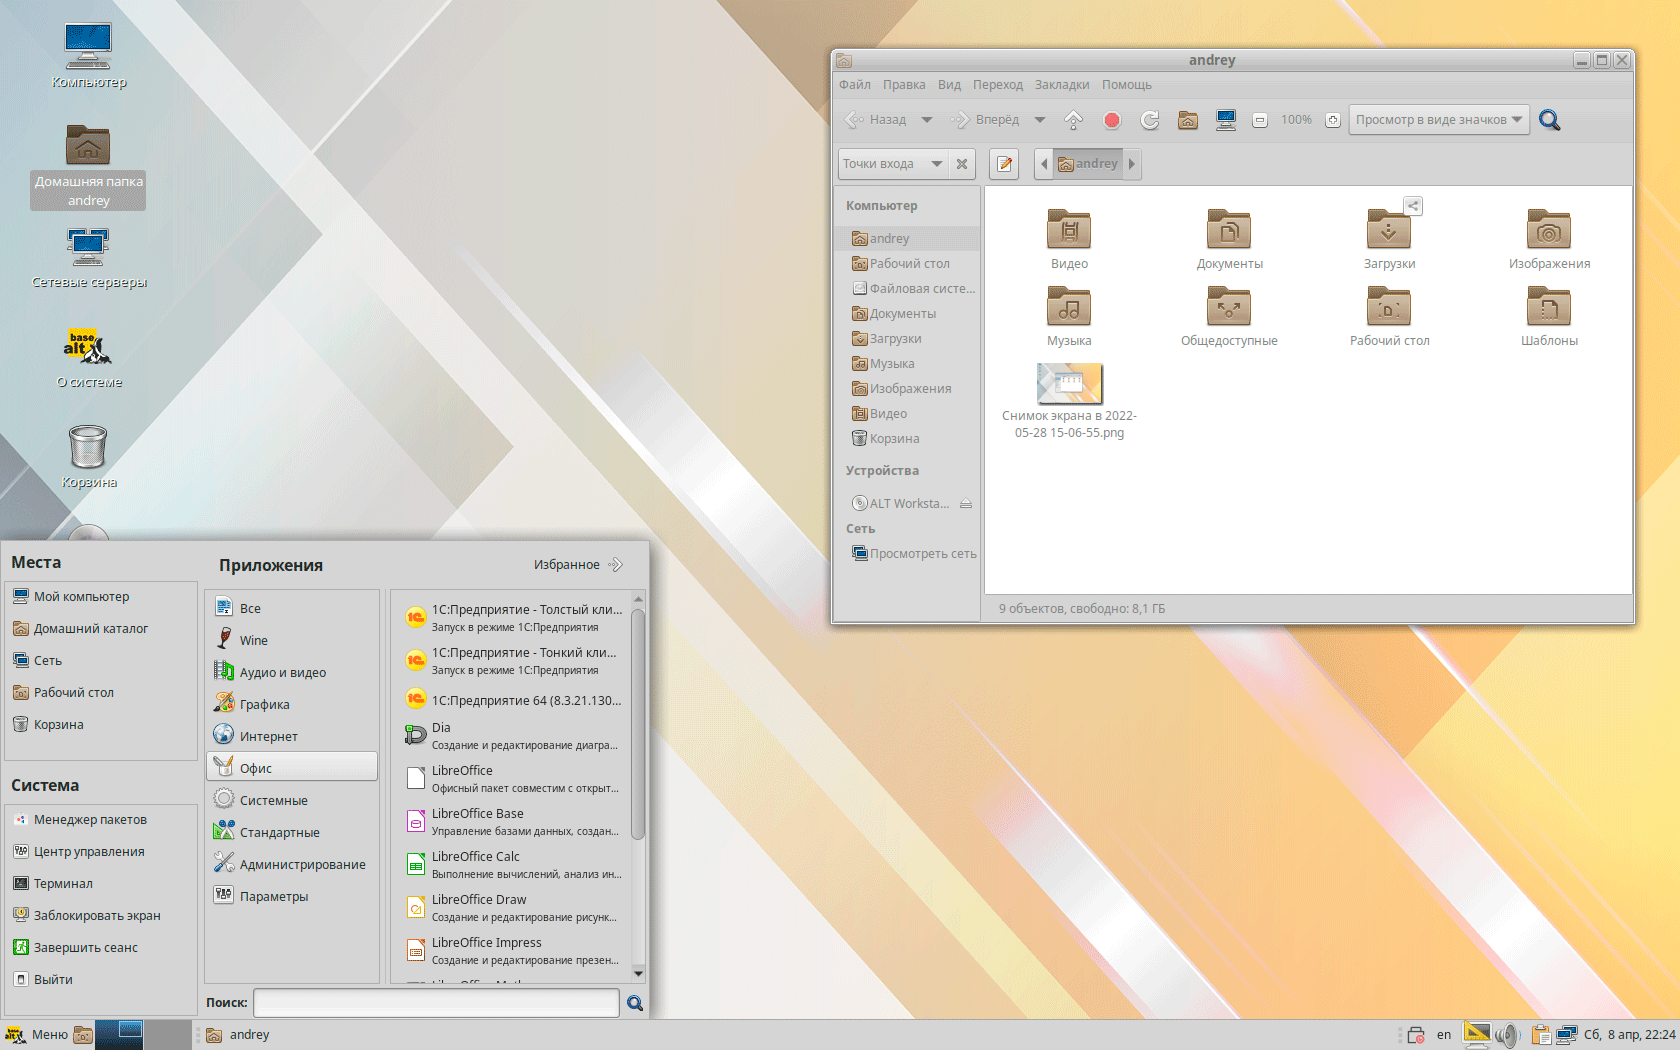 https://interface31.ru/tech_it/images/Linux-desktop-environment-overview-016.png